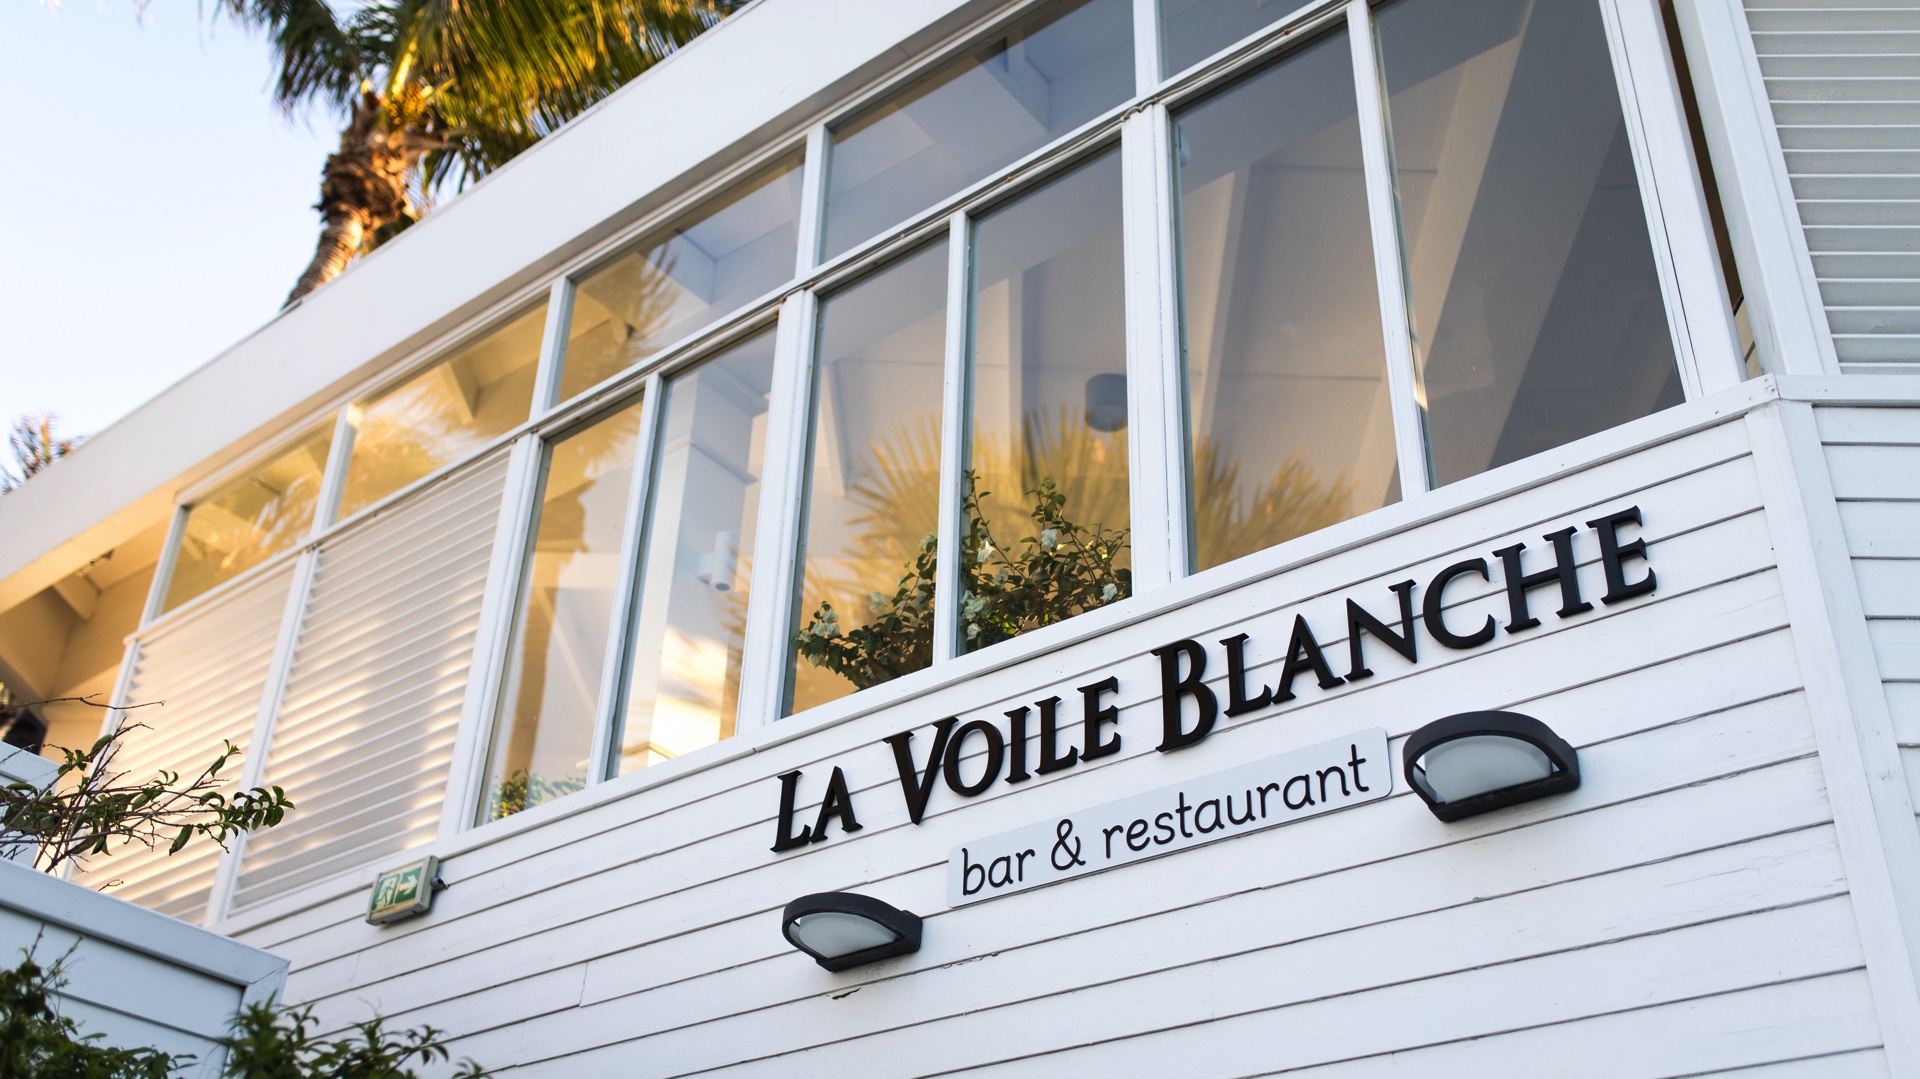 Restaurant & bar - La voile blanche